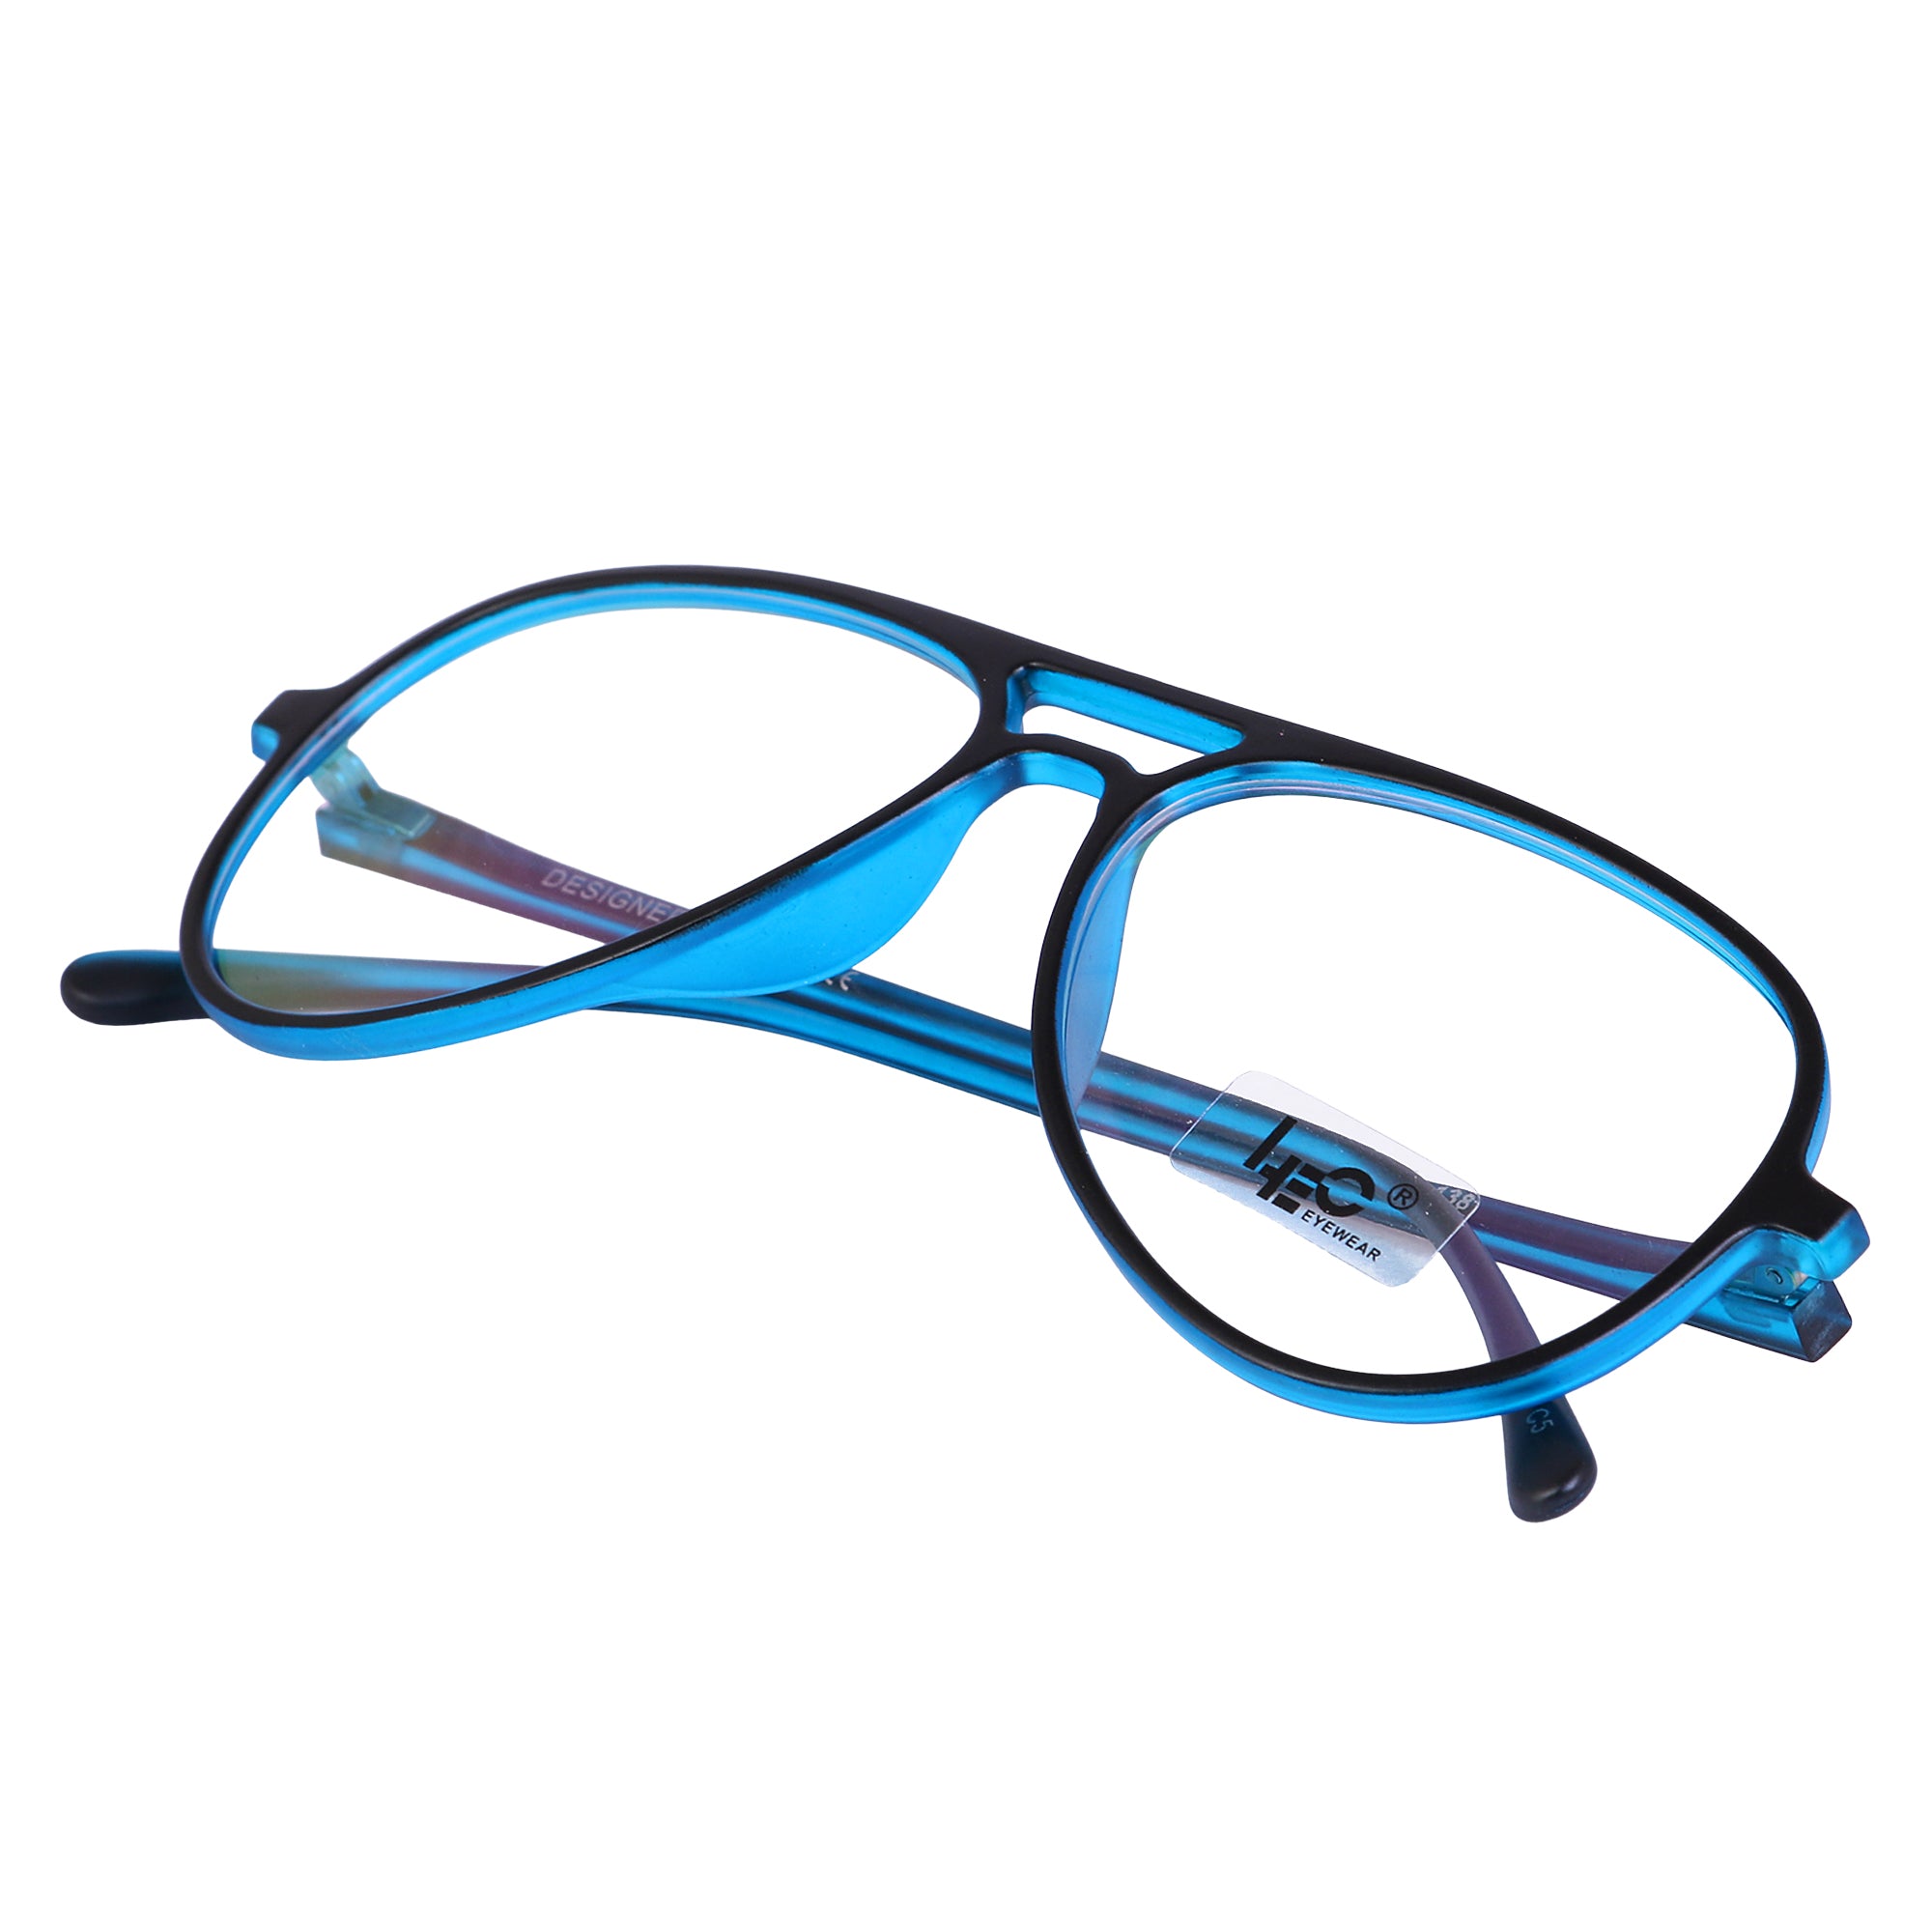 Black & Blue Rimmed Aviator Eyeglasses - L2788-C4